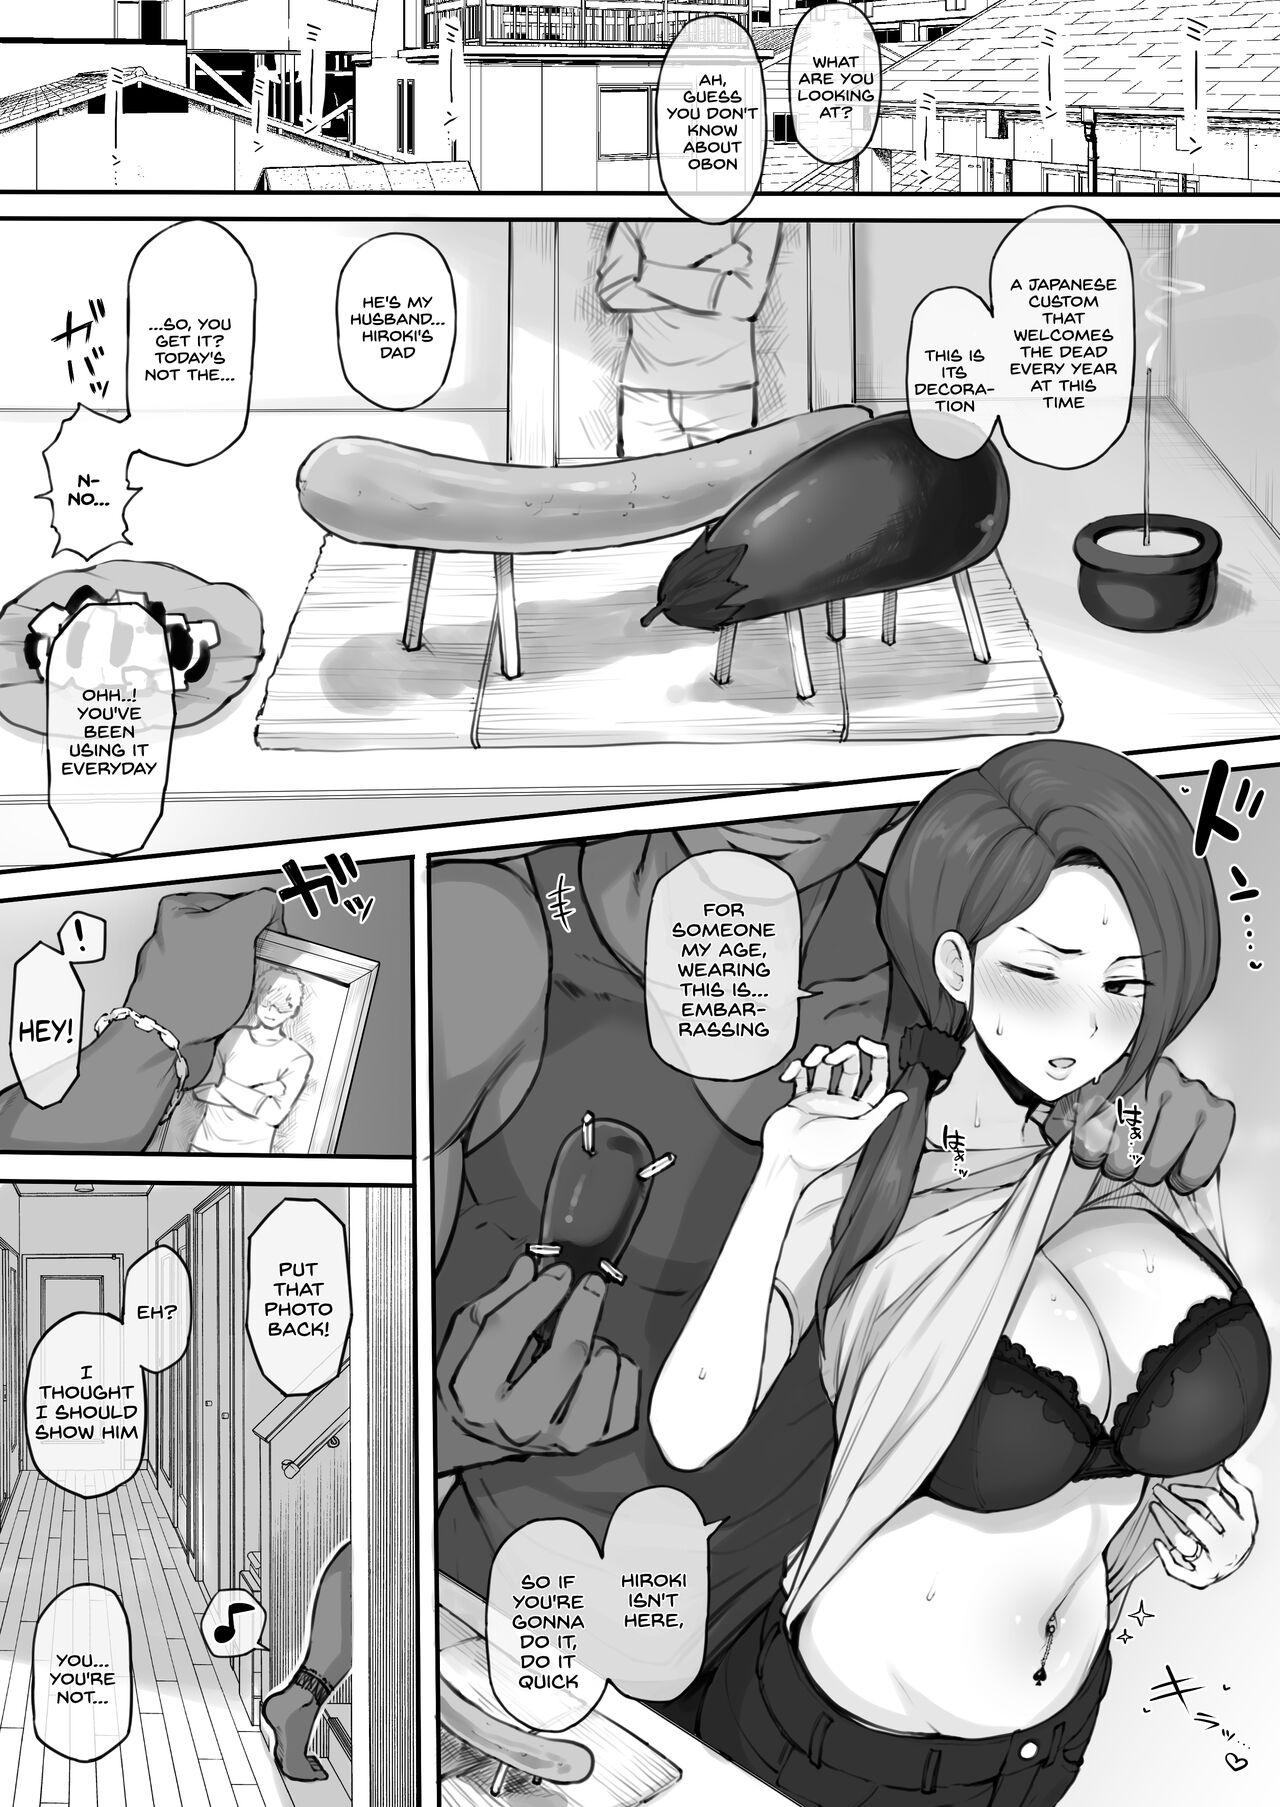 Kokujin no Tenkousei NTR ru Chapters 1-6 part 1 Plus Bonus chapter: Stolen Mother’s Breasts 19